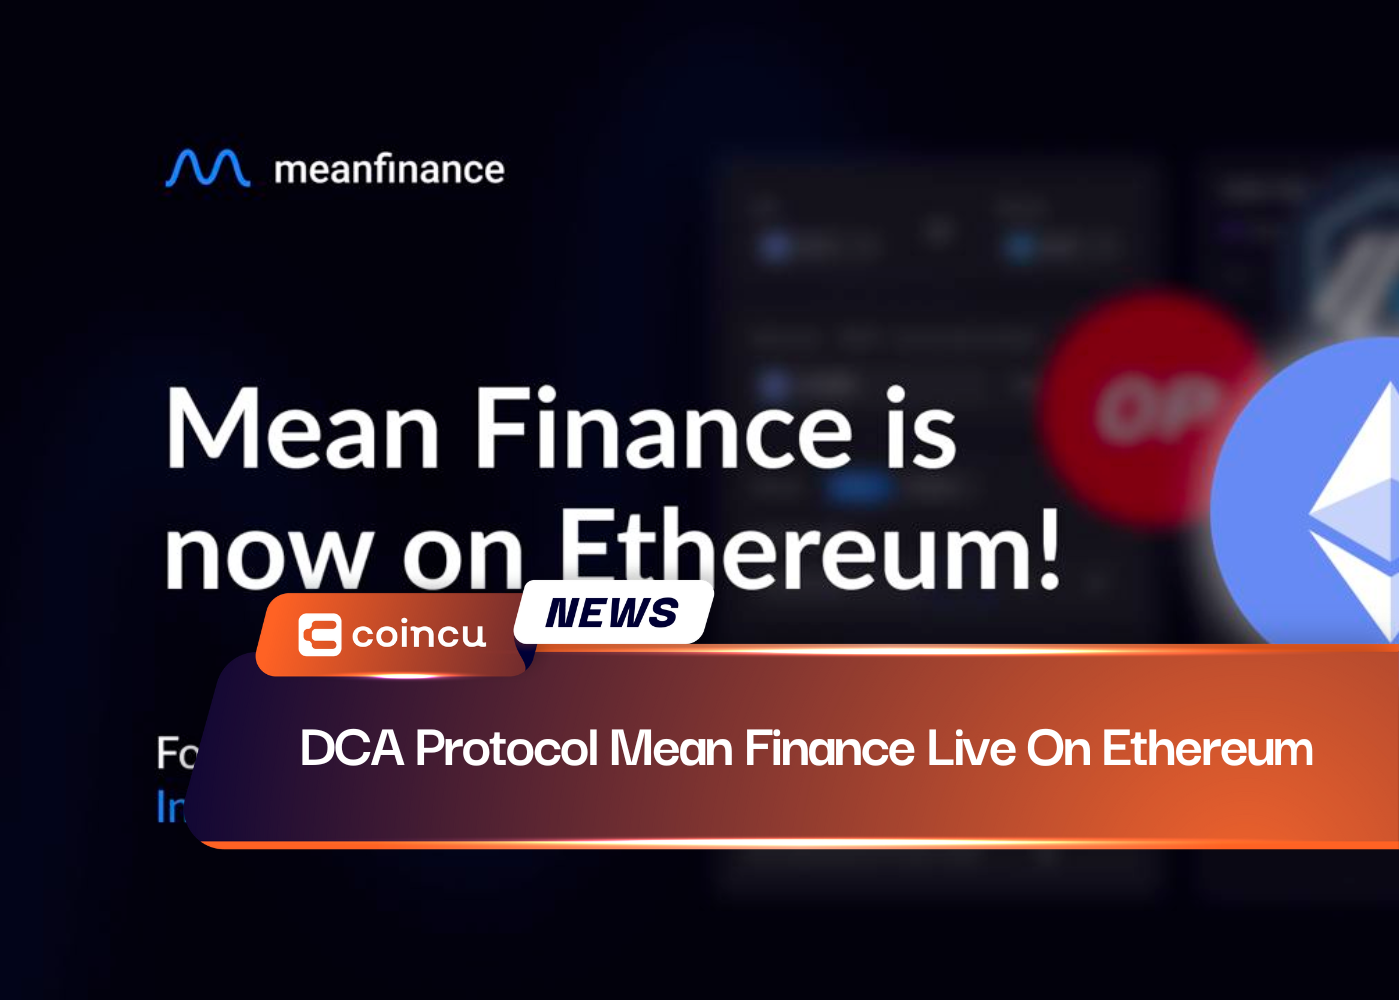 DCA Protocol Mean Finance Live On Ethereum